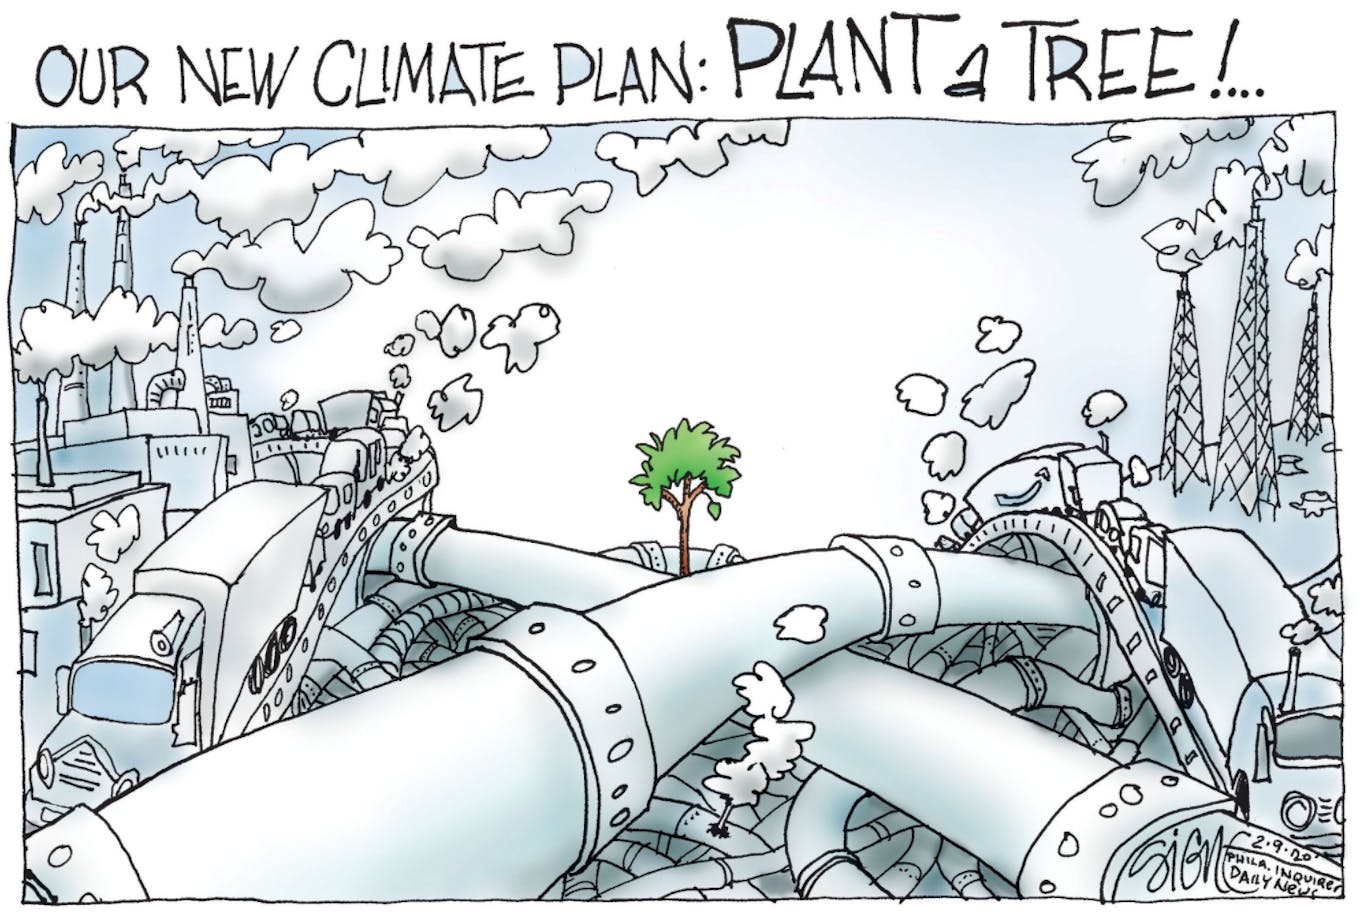 The tree planting climate pledge